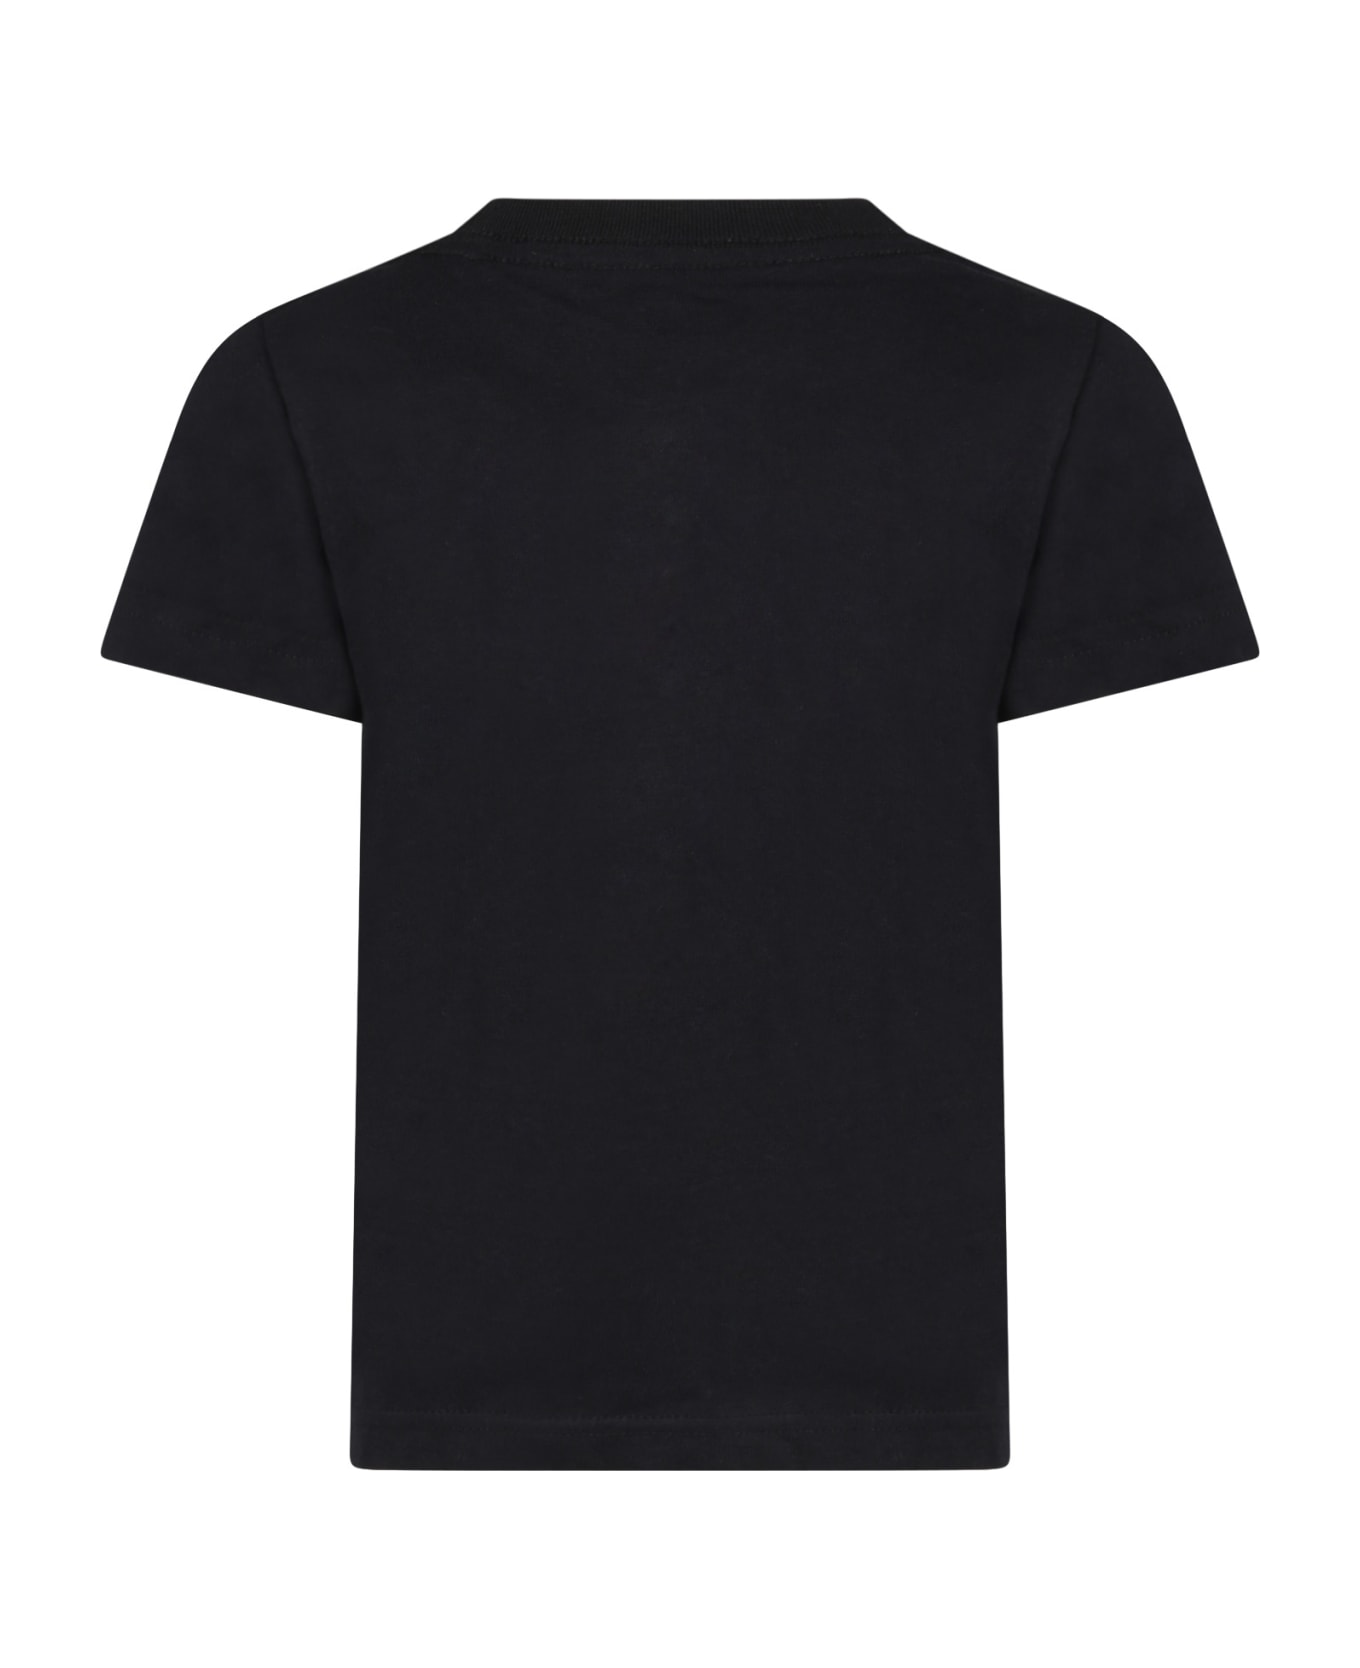 Levi's Black T-shirt For Kids With Logo - Black